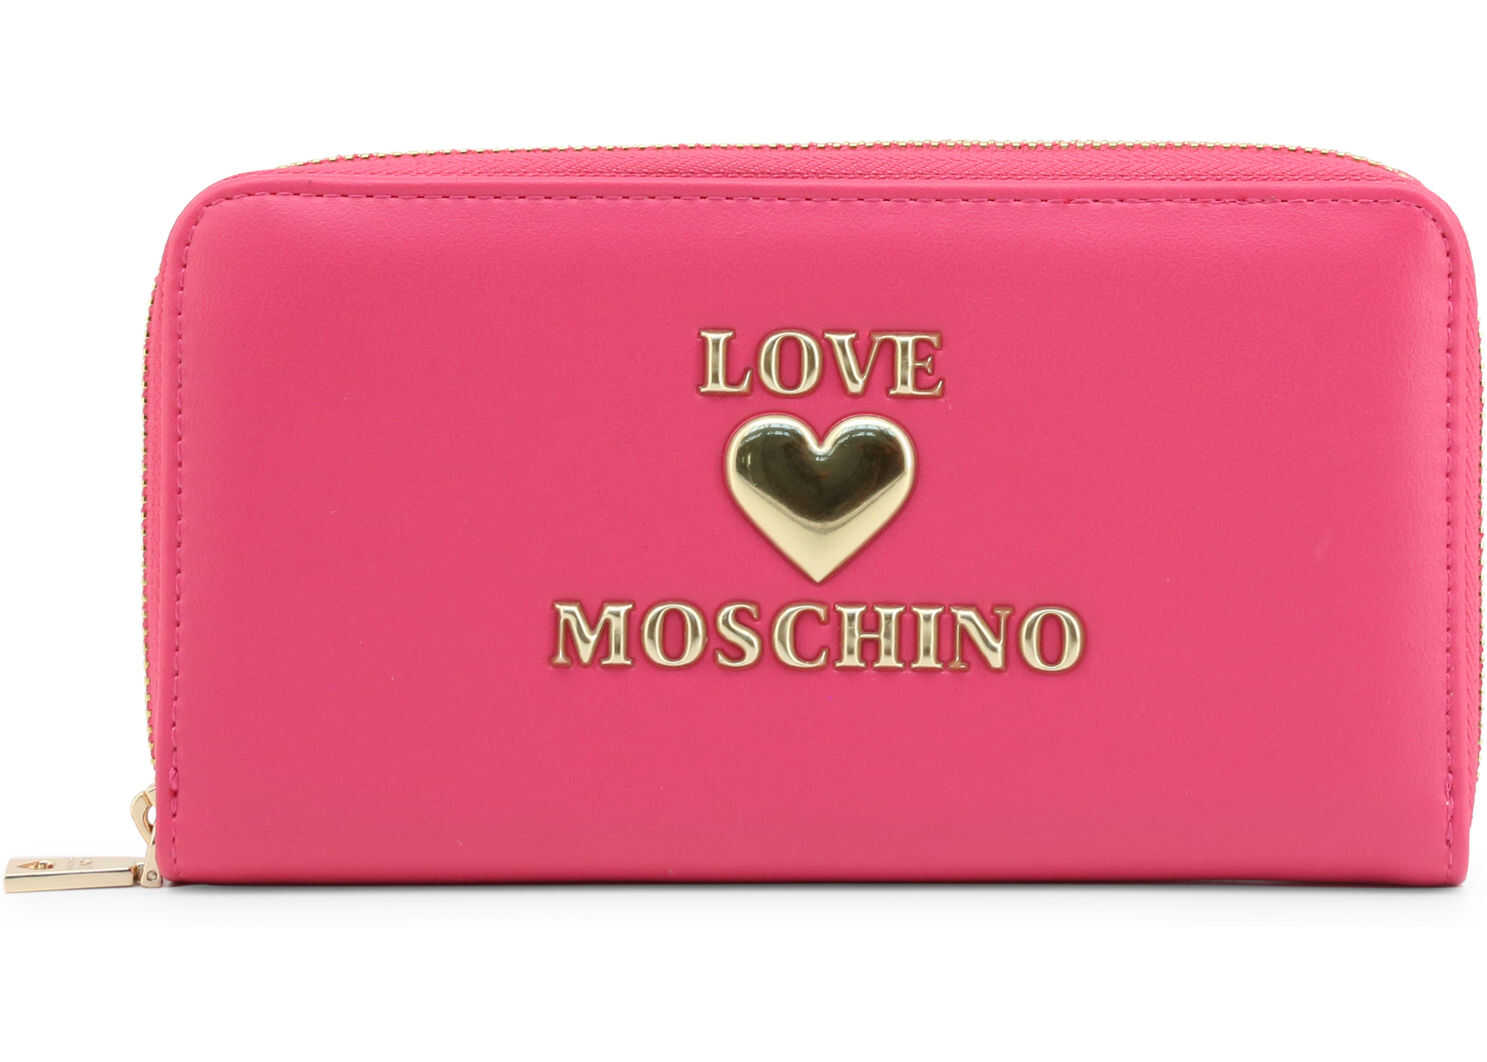 LOVE Moschino Jc5617Pp1Clf0 PINK